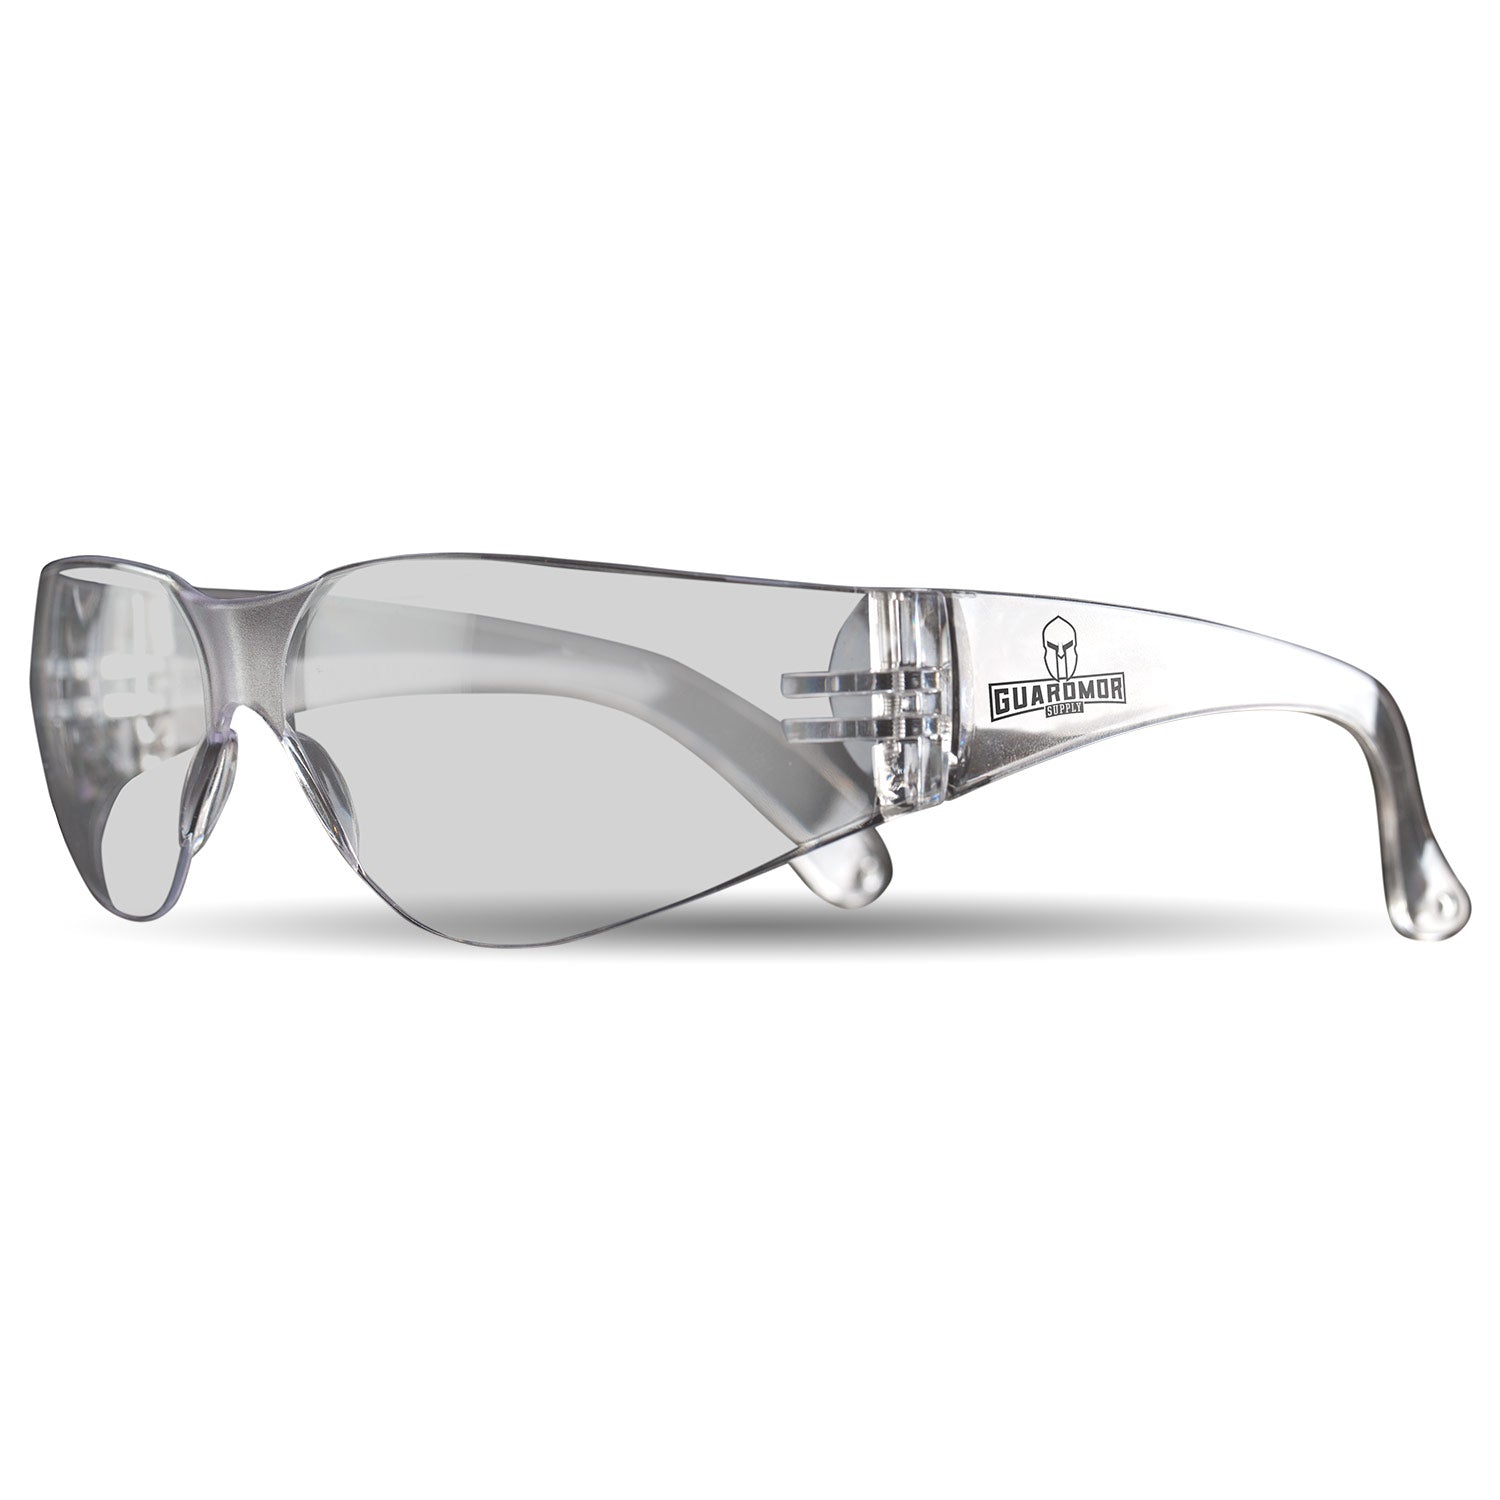 LIFT Safety - Guardmor Safety Glasses